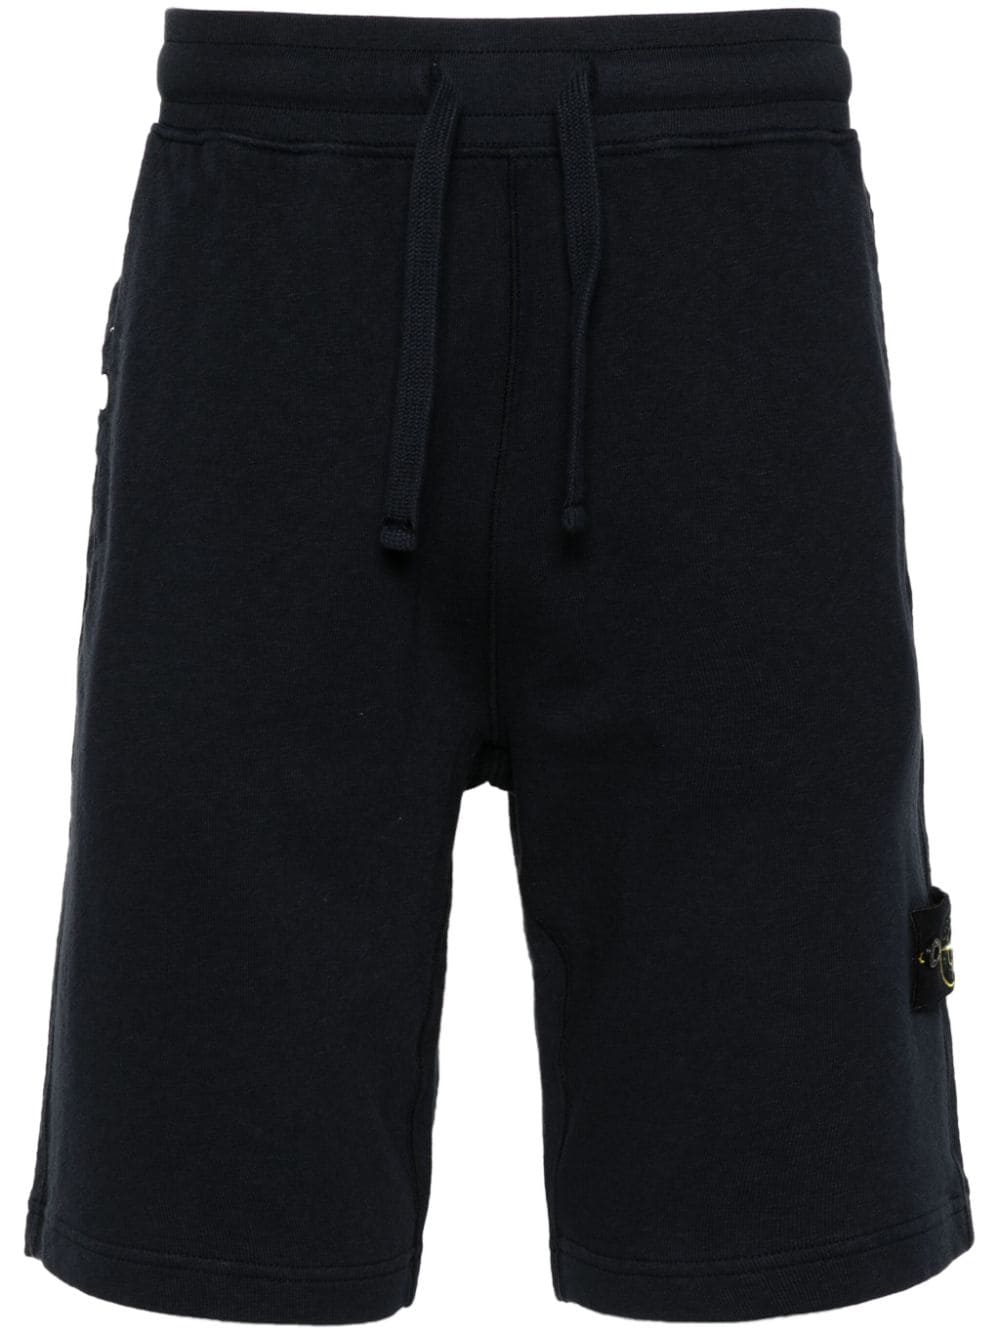 Blue fleece Bermuda shorts